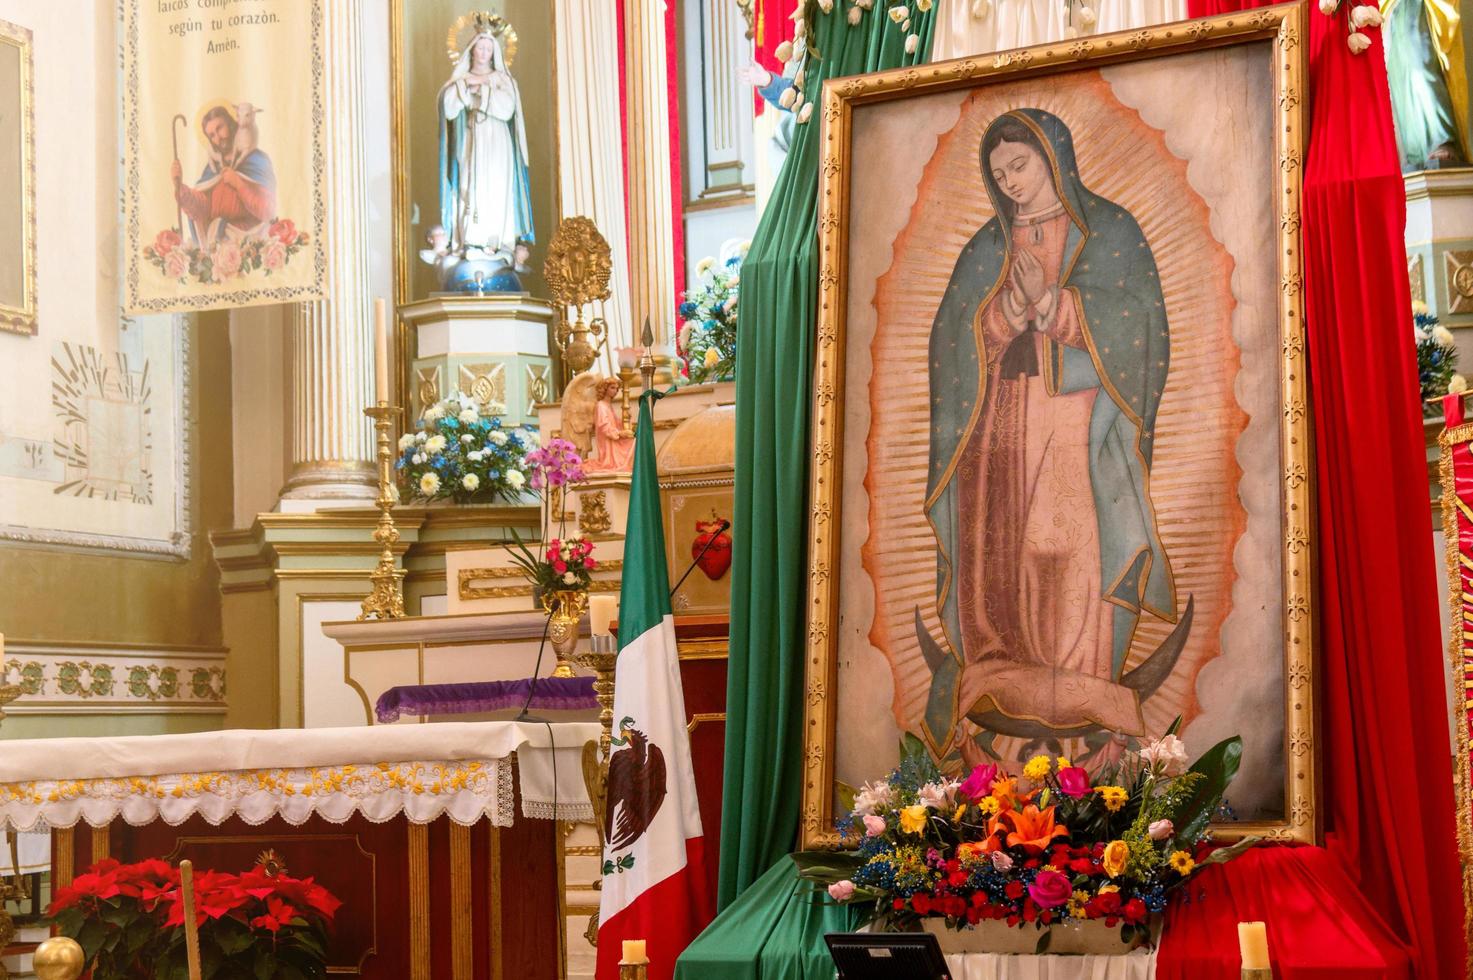 santiago de queretaro, queretaro, mexico - november 09, 2022 jungfrulig av guadalupe inuti de kyrka av santiago apostol foto